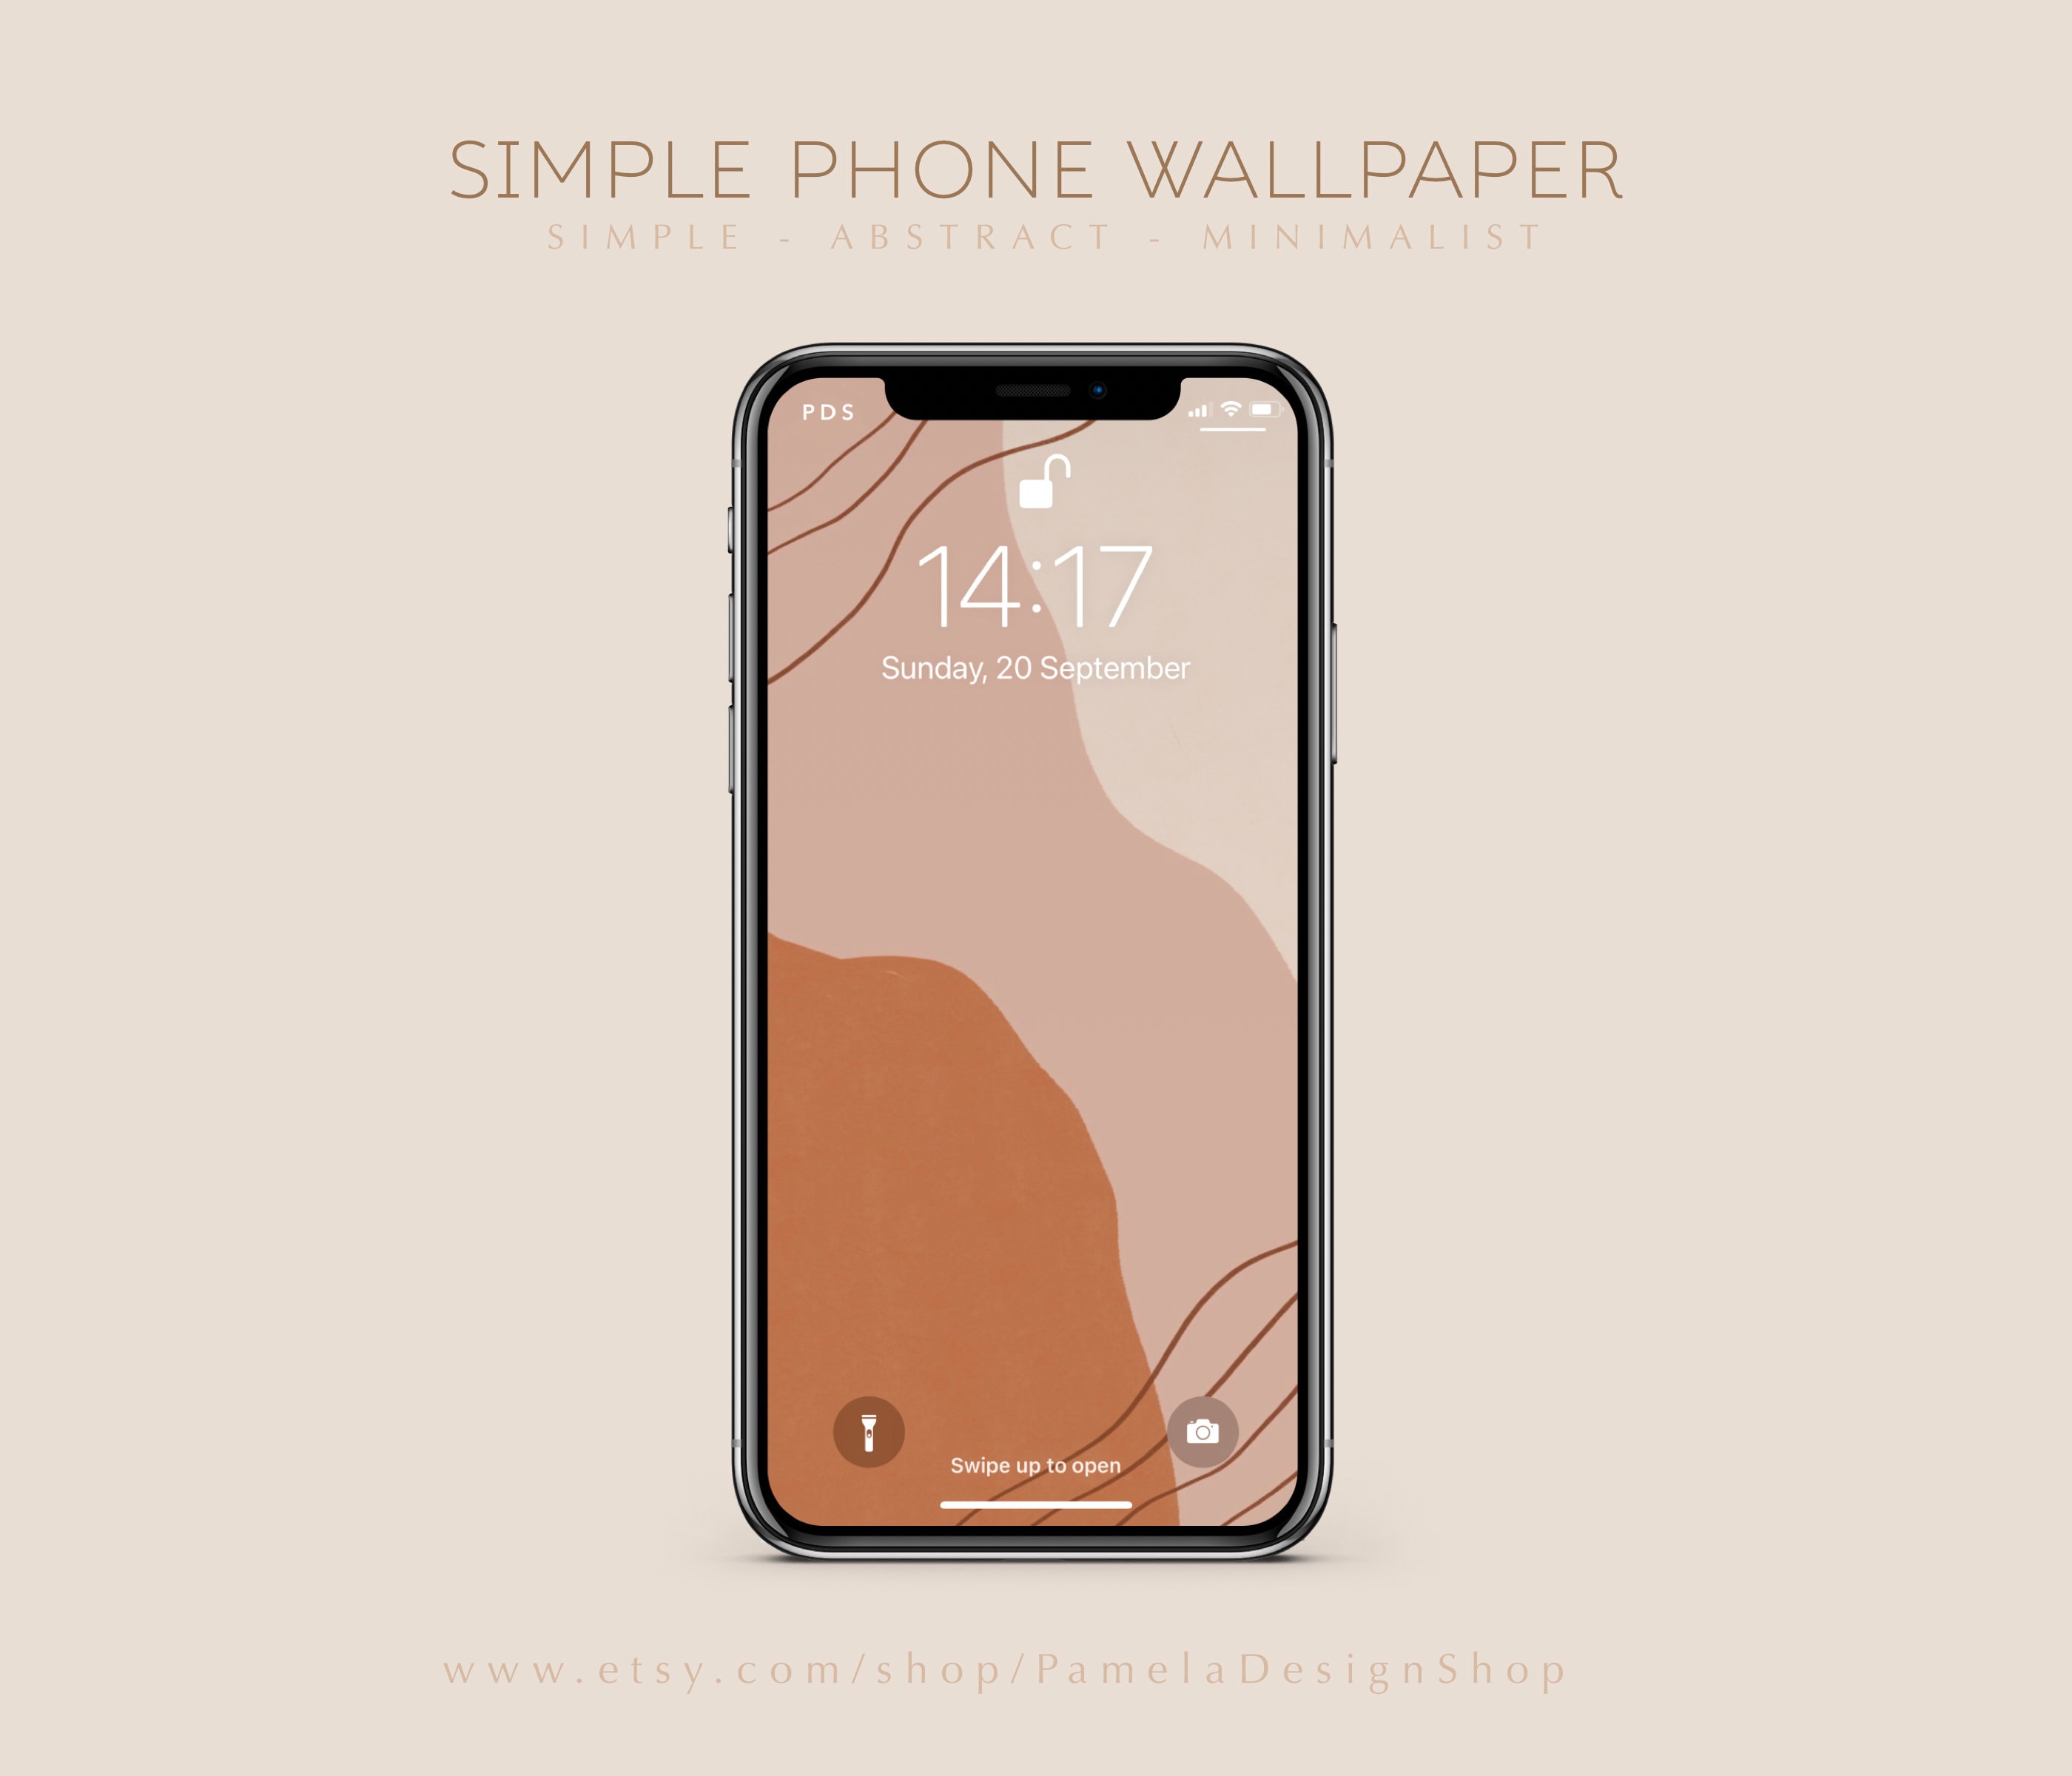 Simple iPhone Wallpaper Design Modern And Minimalist